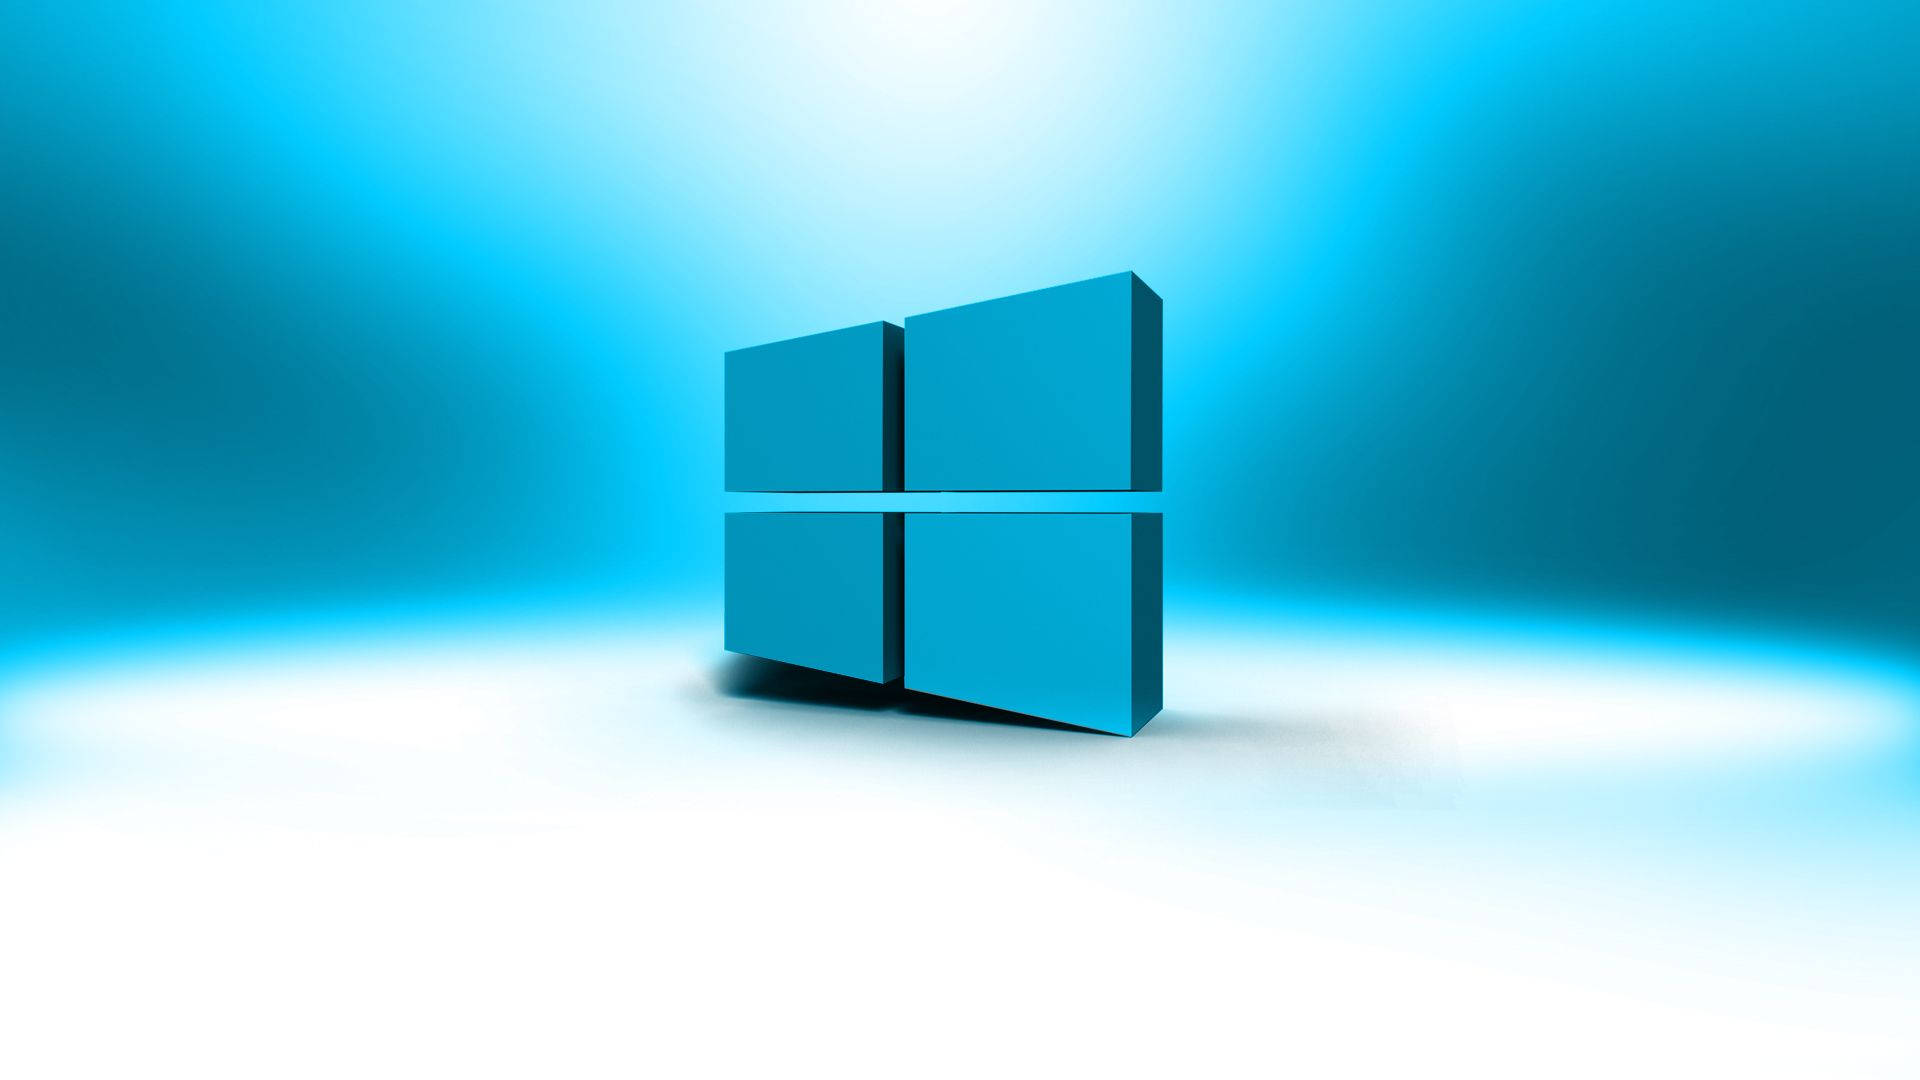 Windows Logo On Blue 3d Background Background